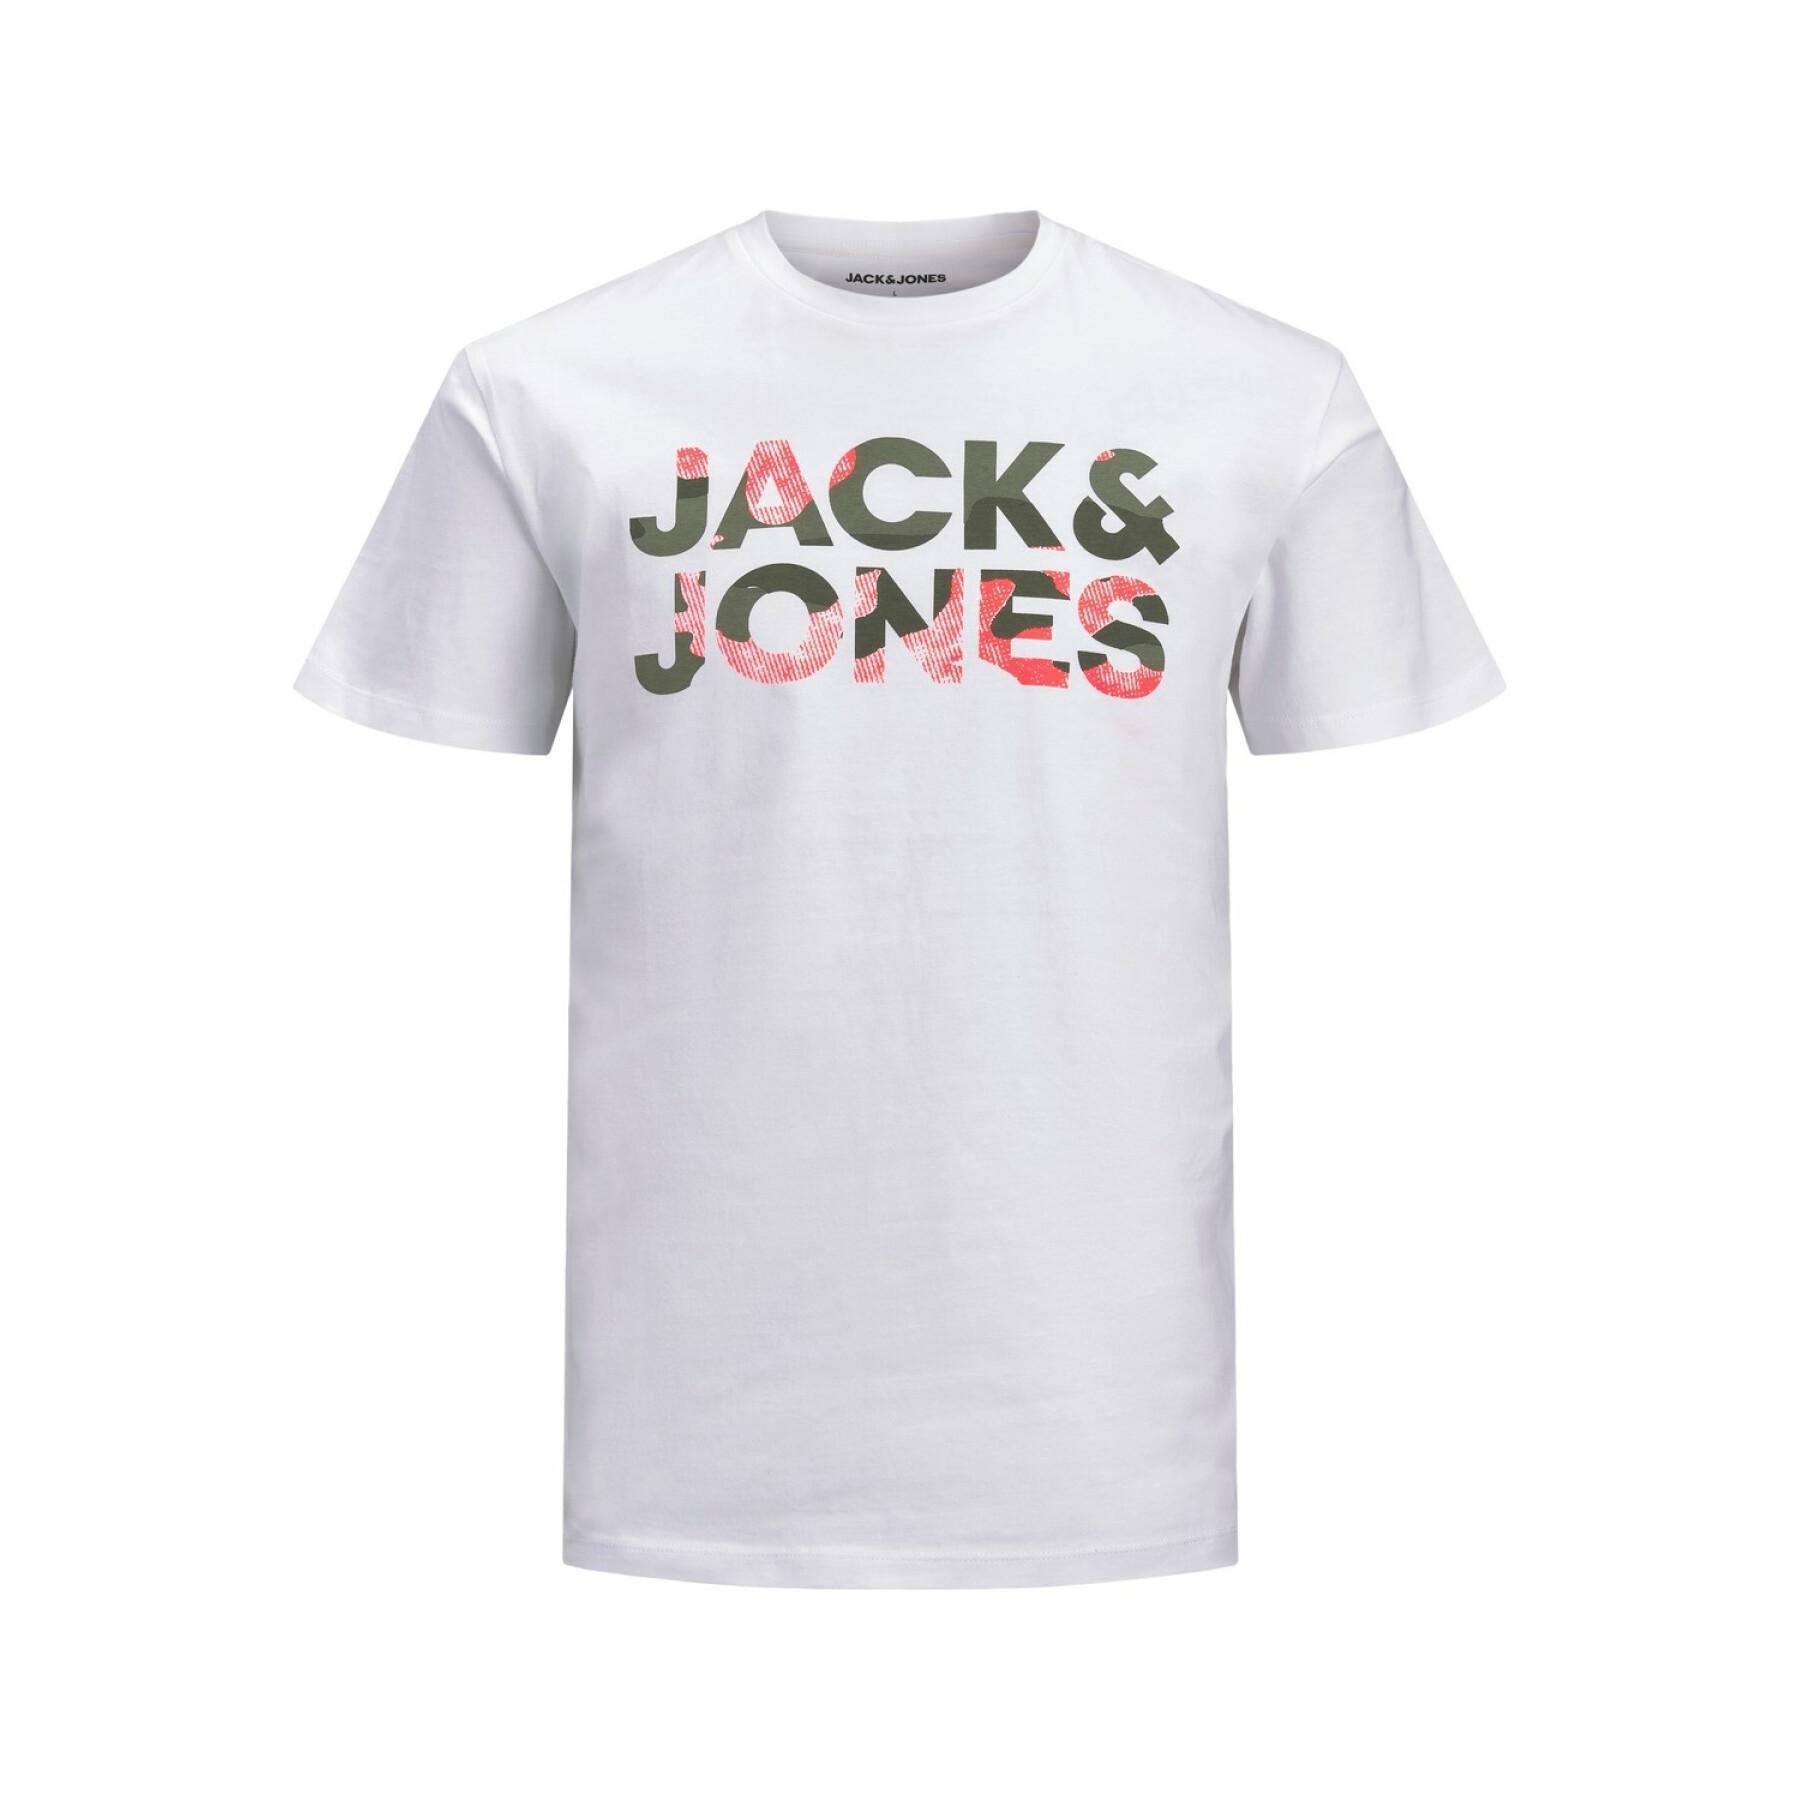 Camiseta logo Jack & Jones impreso